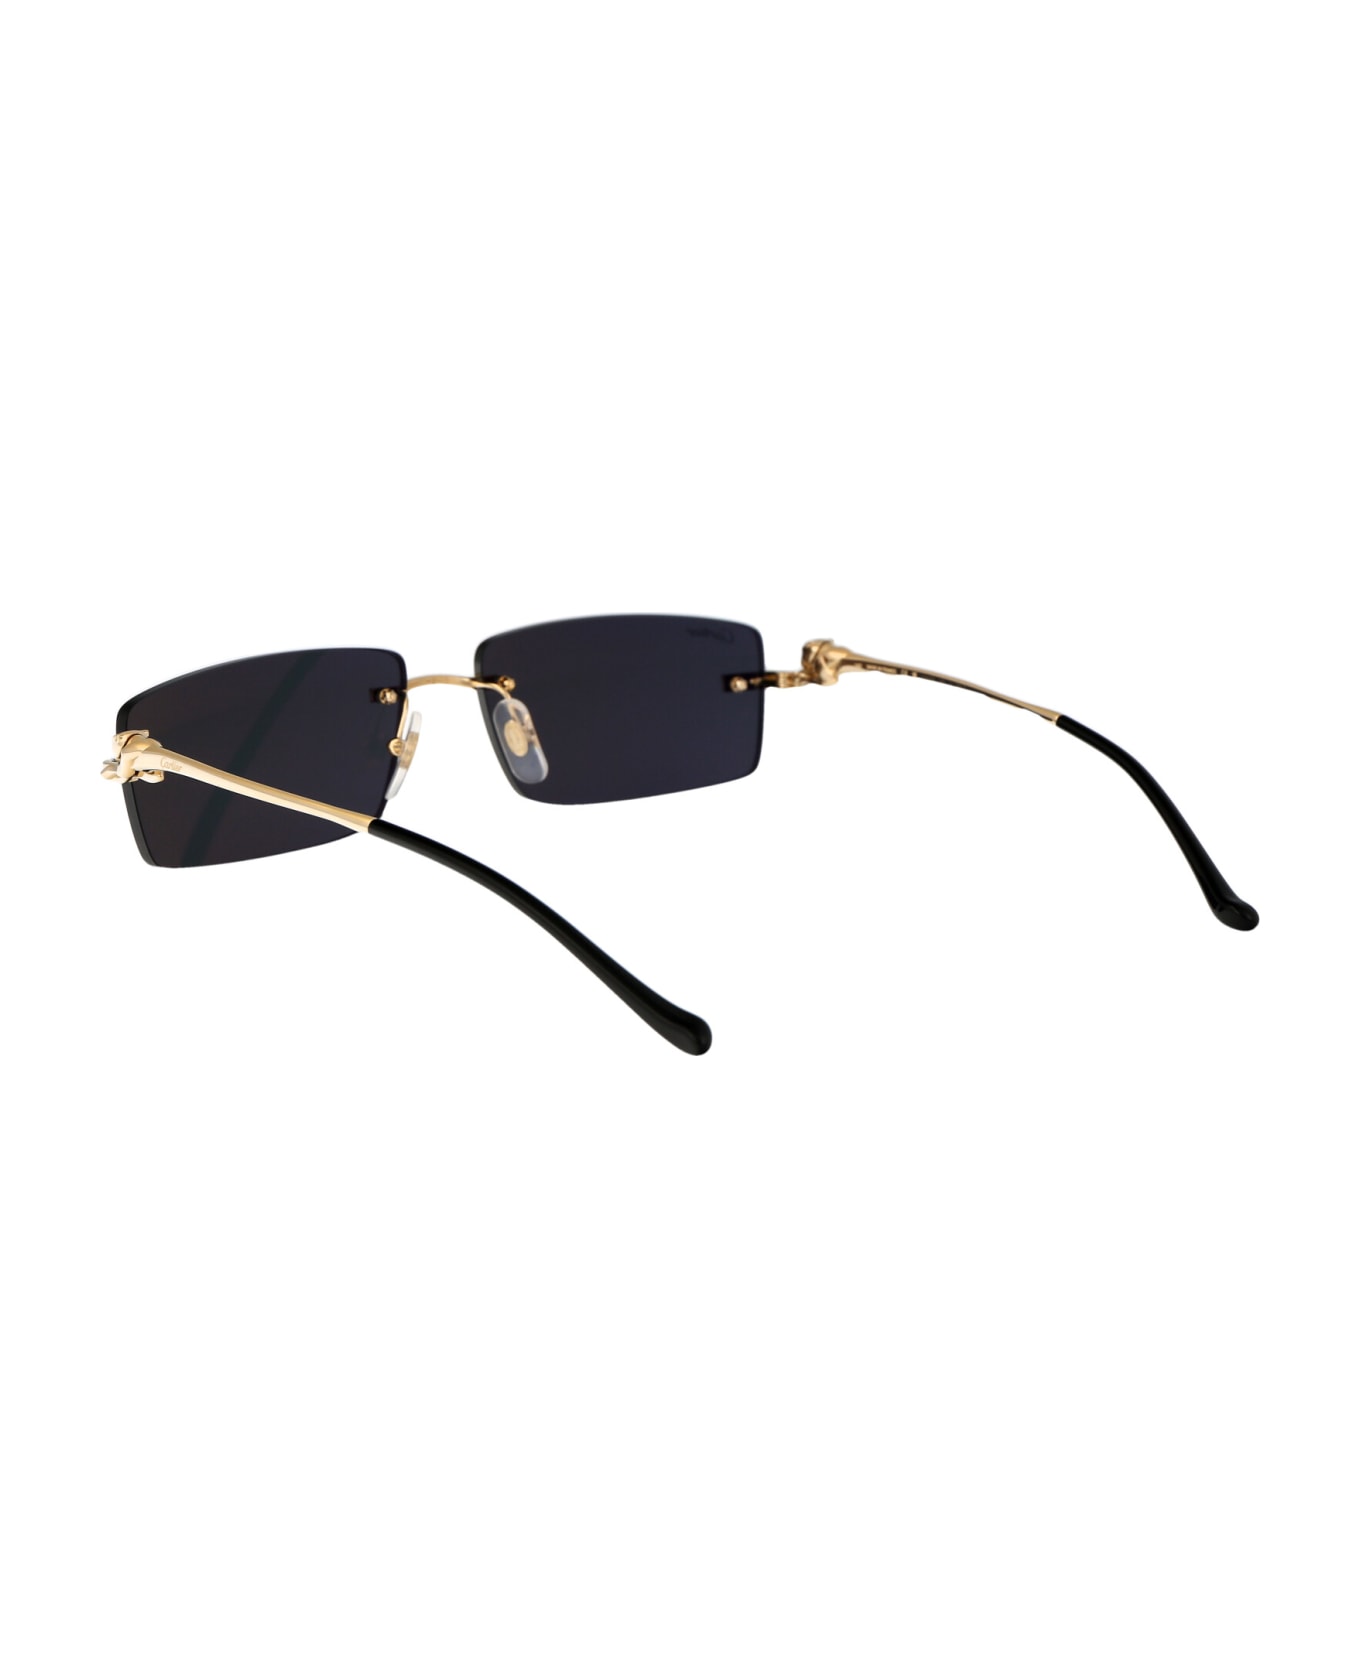 Cartier Eyewear Ct0430s Sunglasses - 001 GOLD GOLD GREY